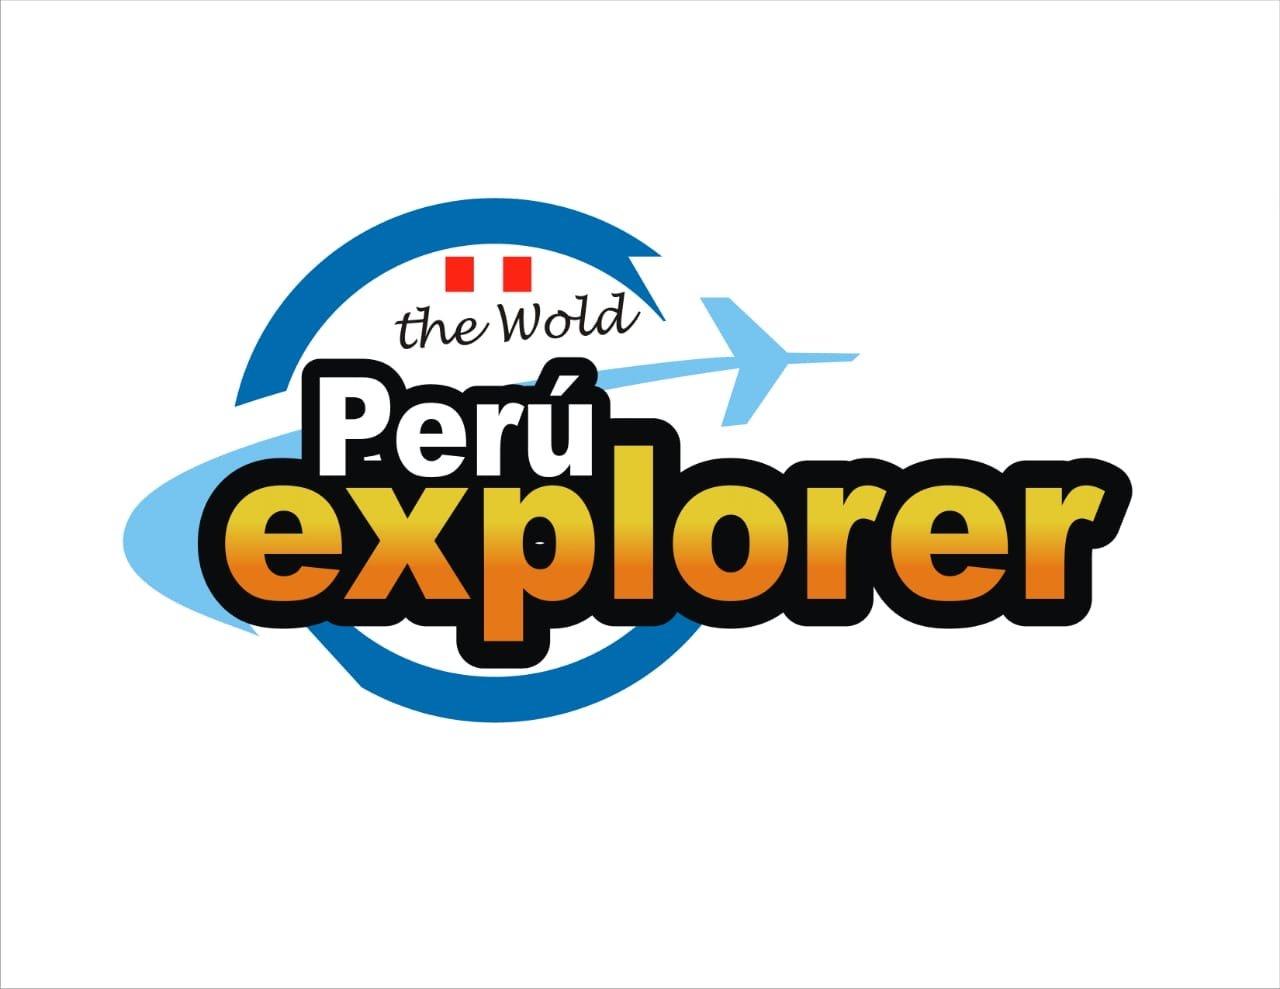 THE WORLD PERU EXPLORER SRL